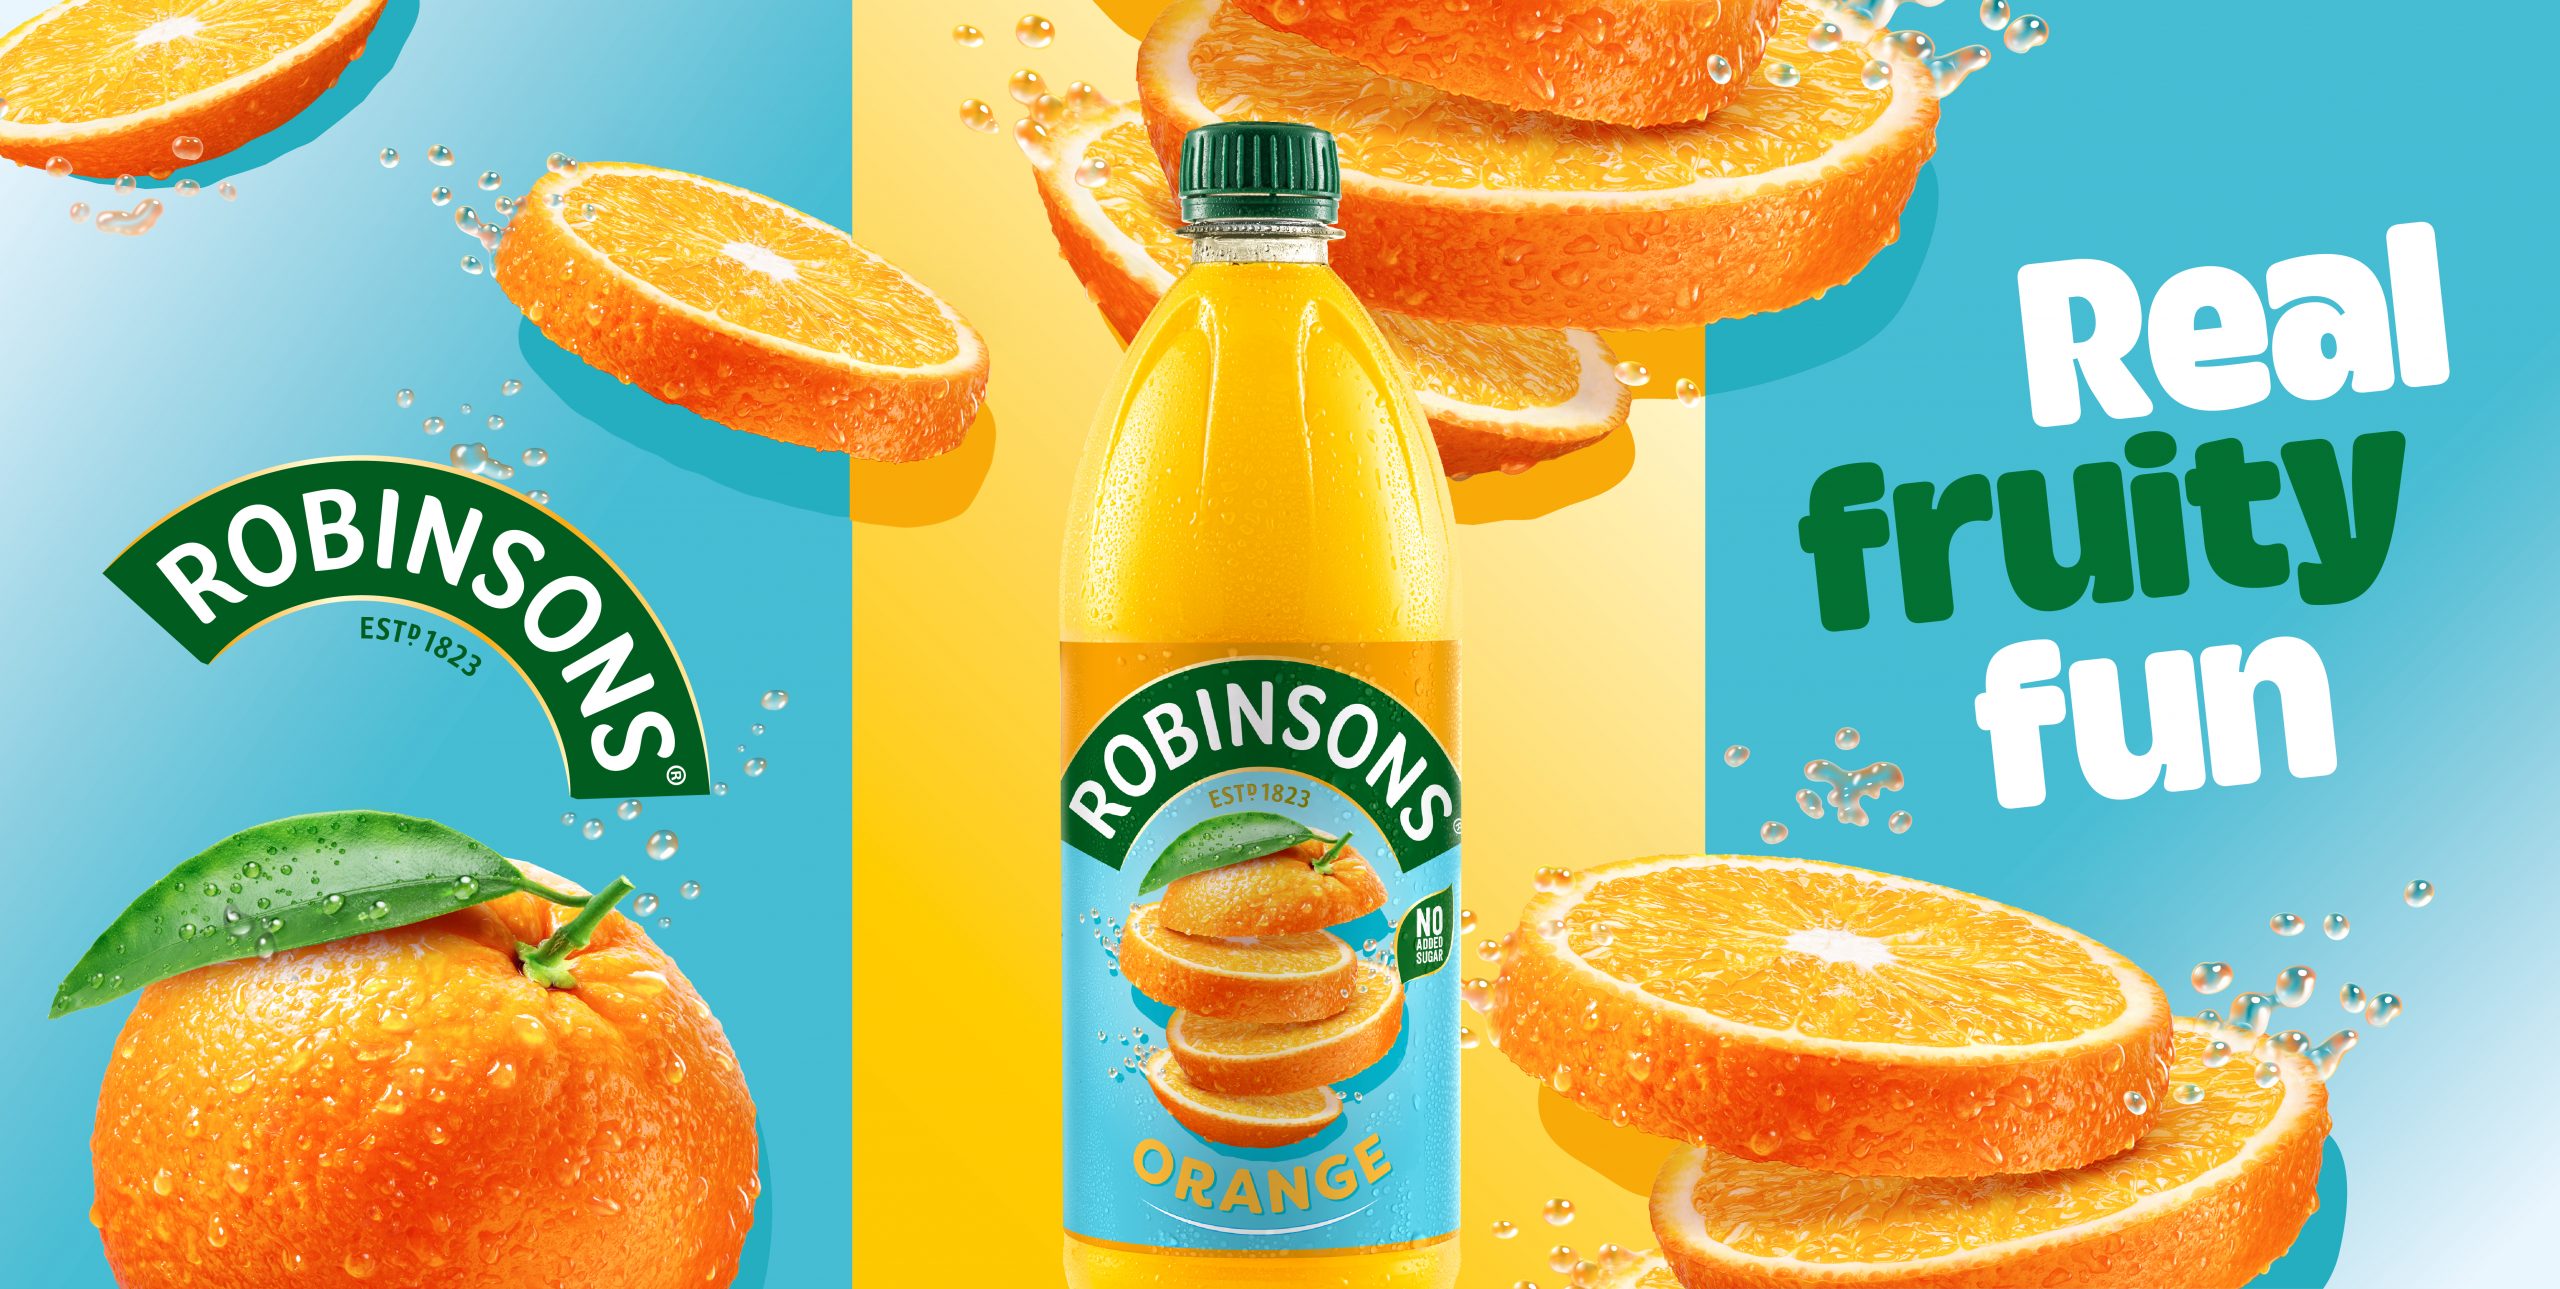 Robinsons unveils rebrand celebrating ‘Real Fruit Joy’